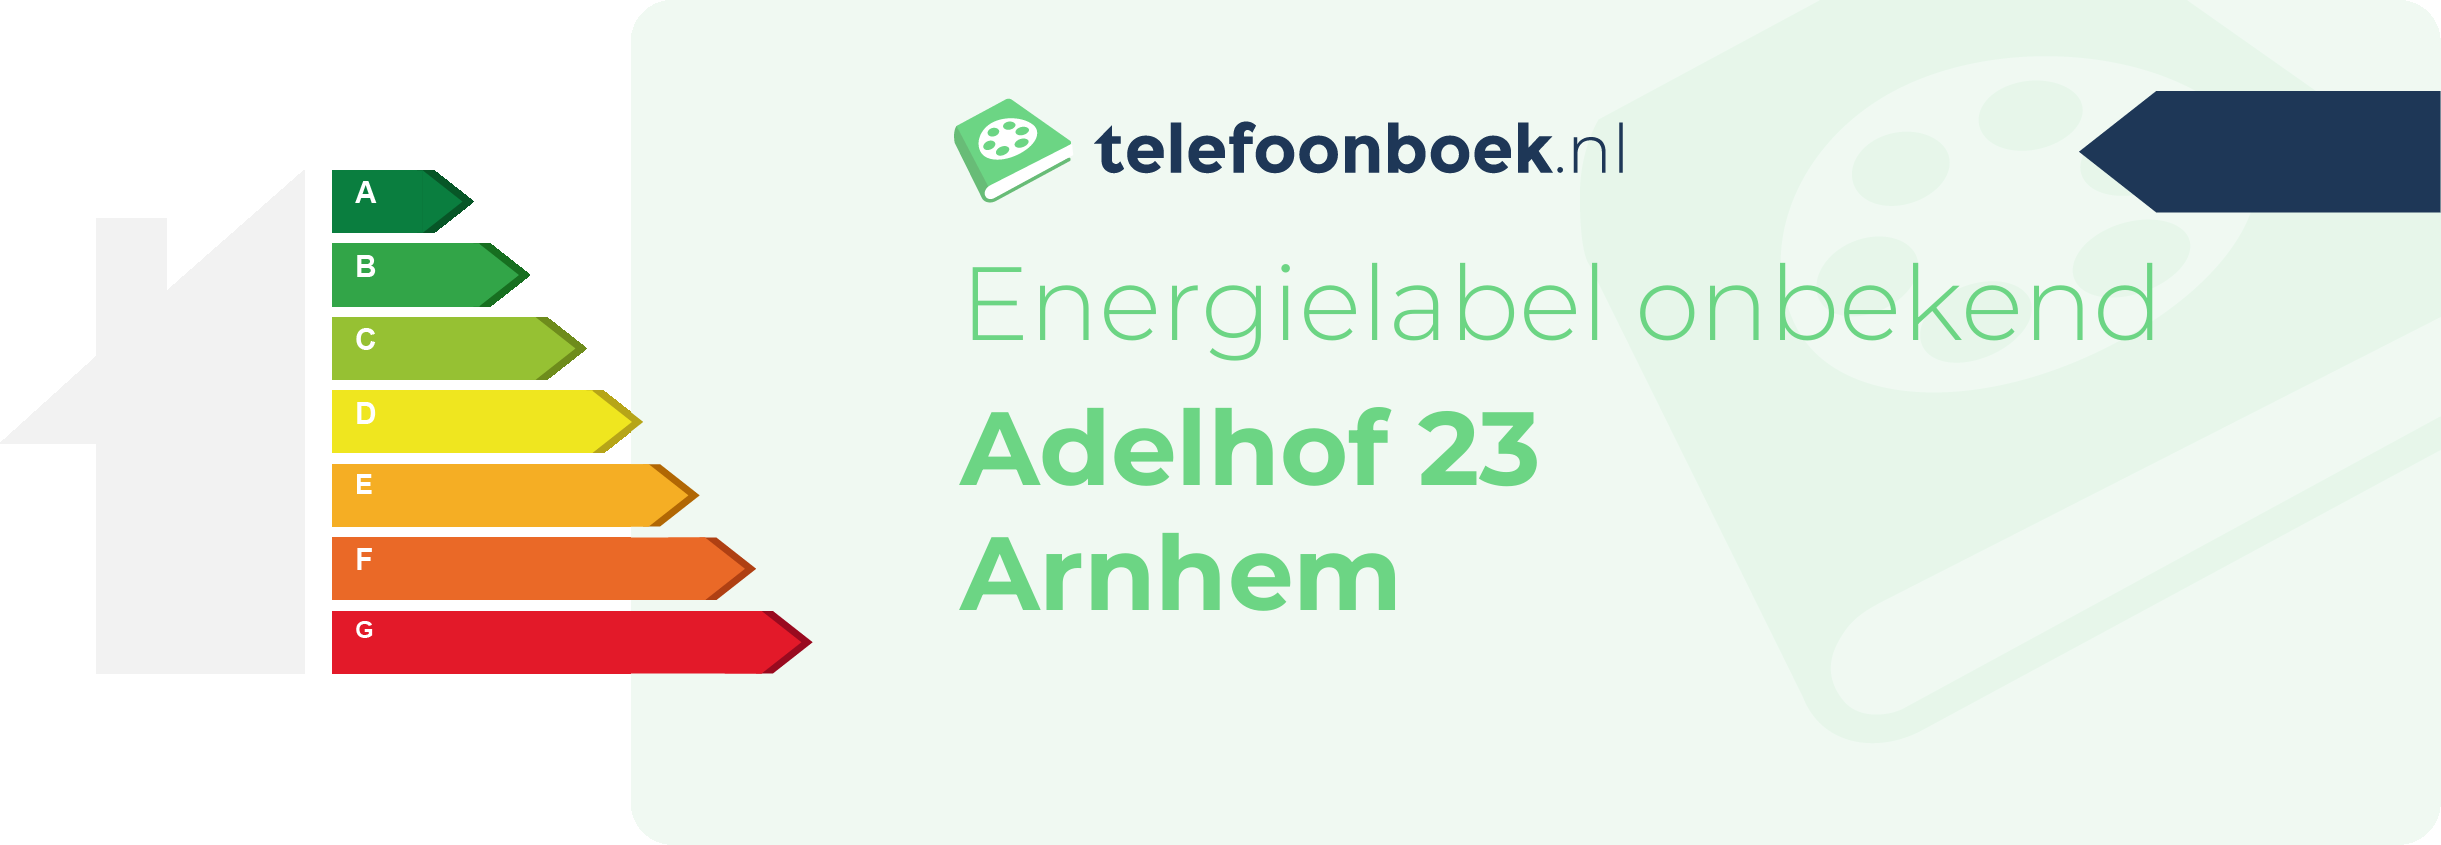 Energielabel Adelhof 23 Arnhem